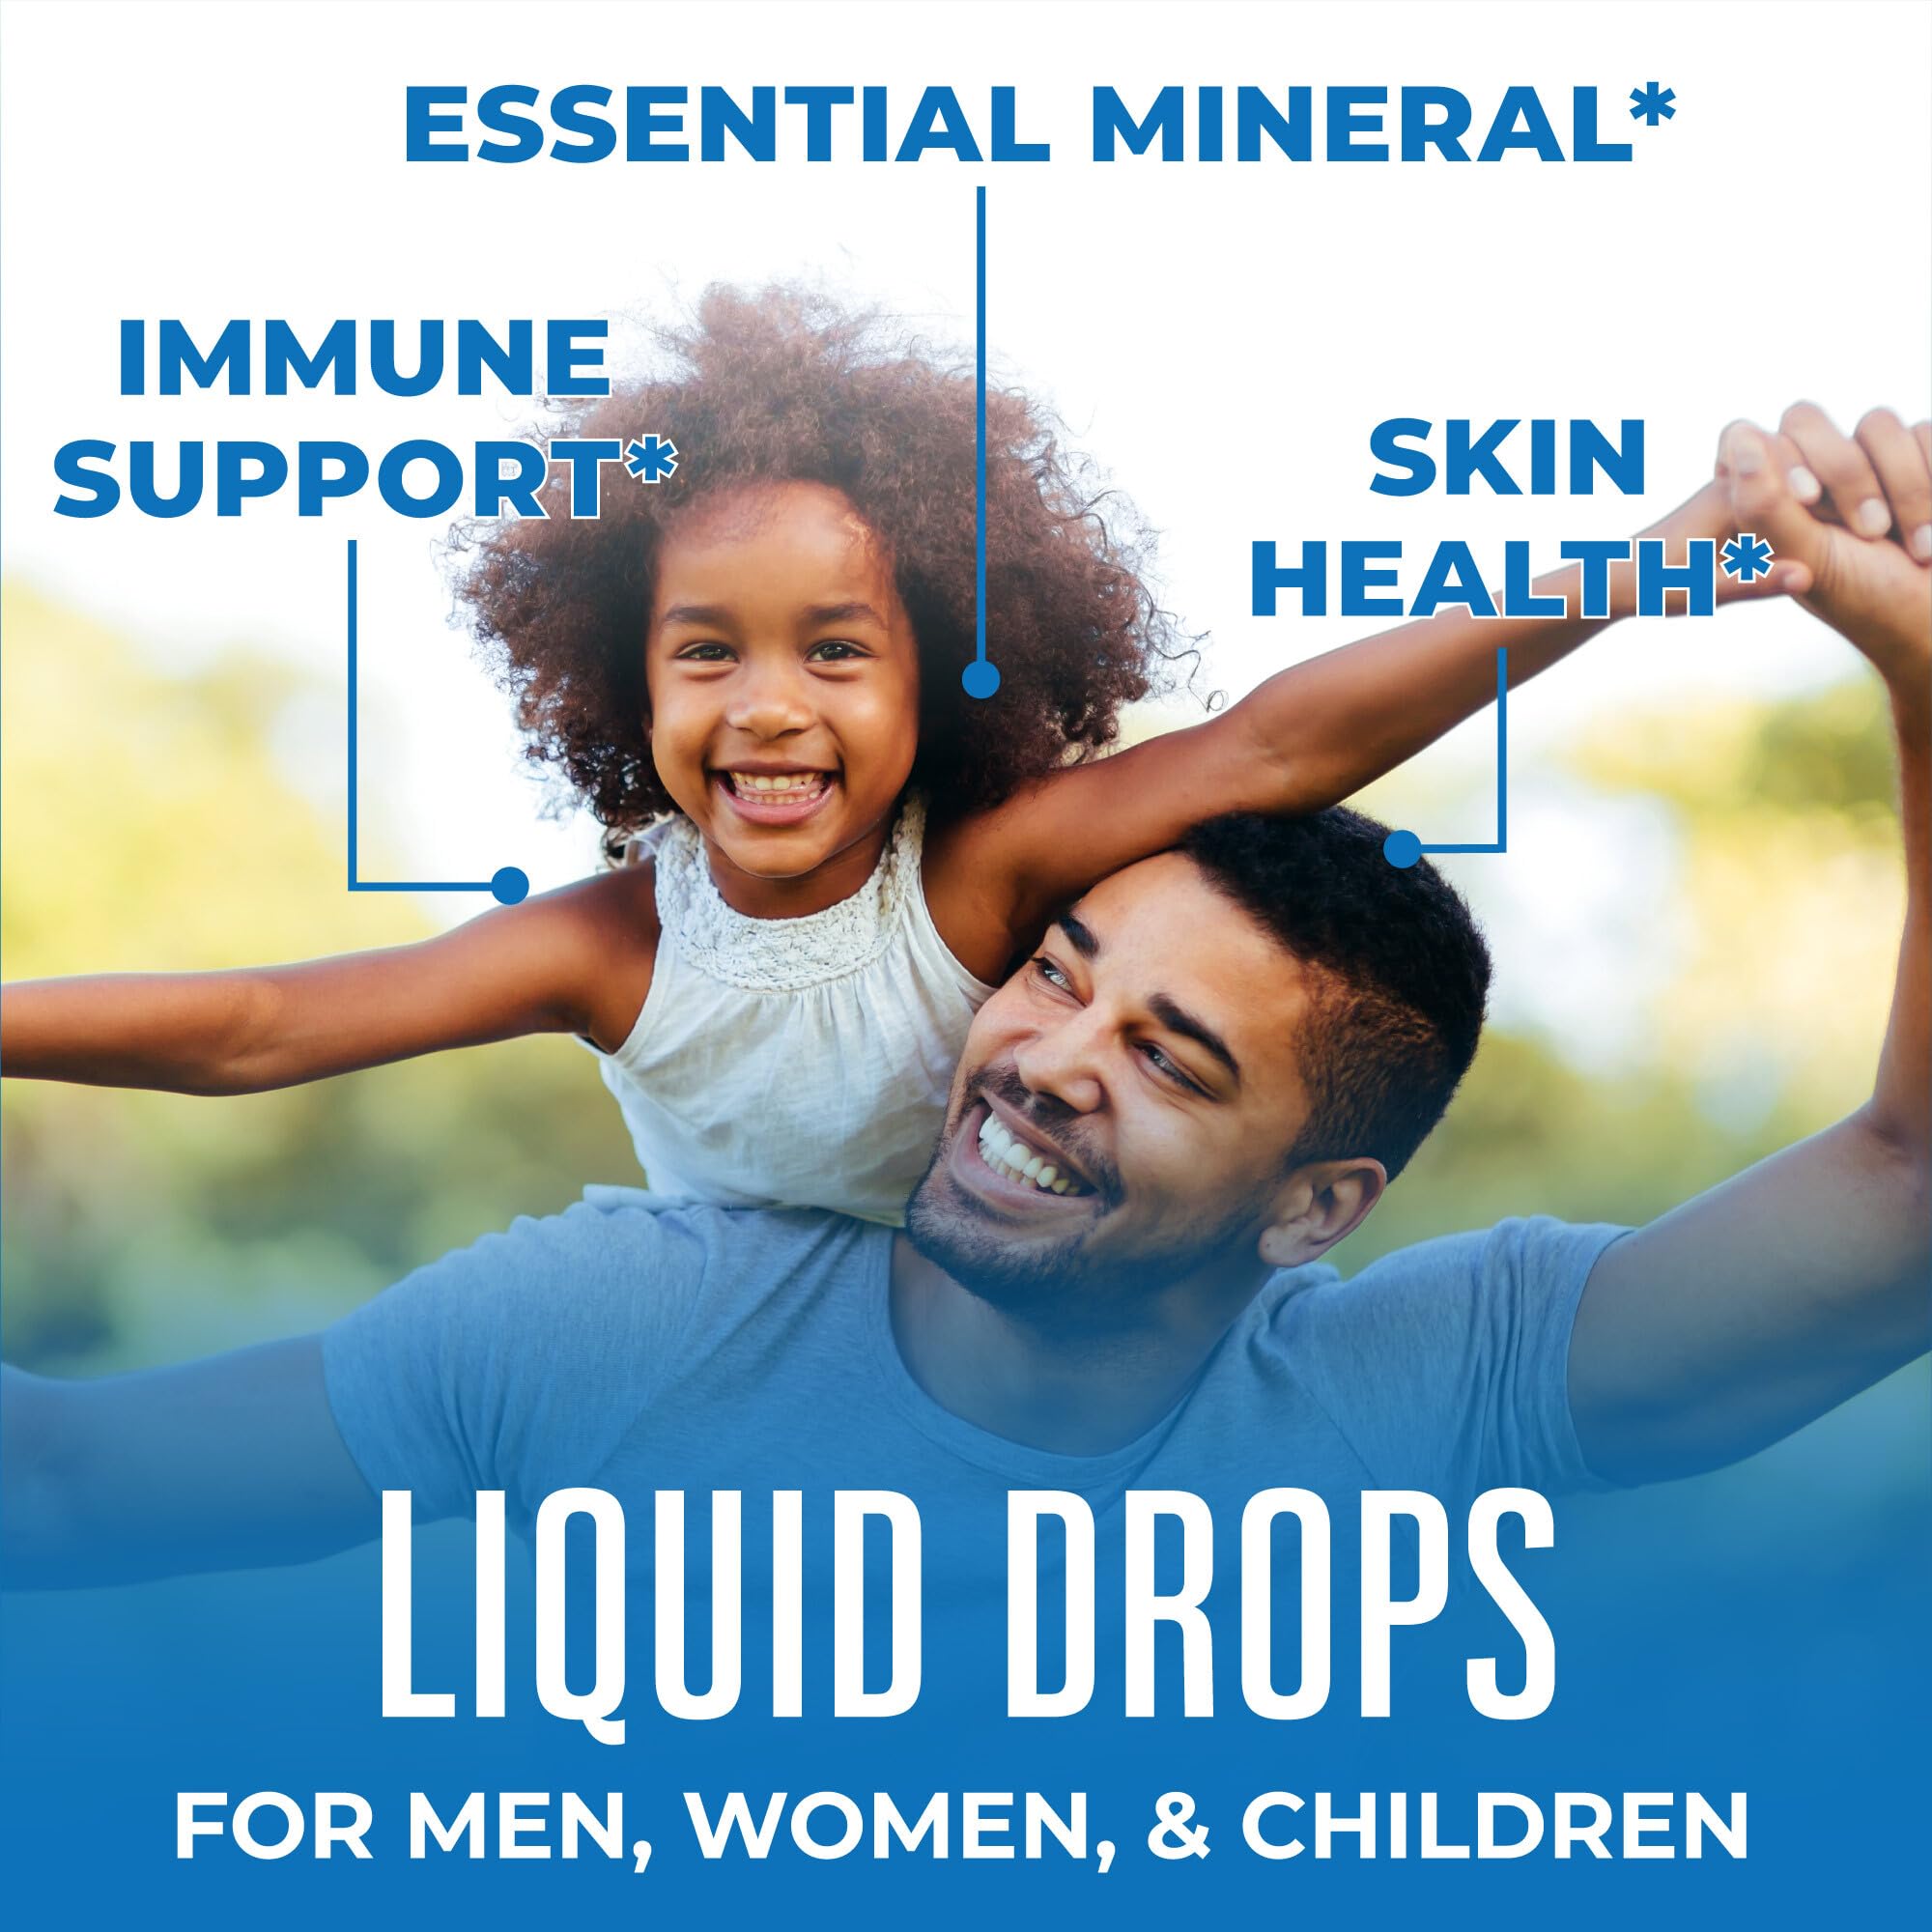 MaryRuth's Ionic Liquid Zinc Drops | Liquid Zinc Supplement for Immune Support & Skin Health | Ionic Zinc for Kids & Adults | Zinc Sulfate| Vegan | Non-GMO | Gluten Free | 40 Servings